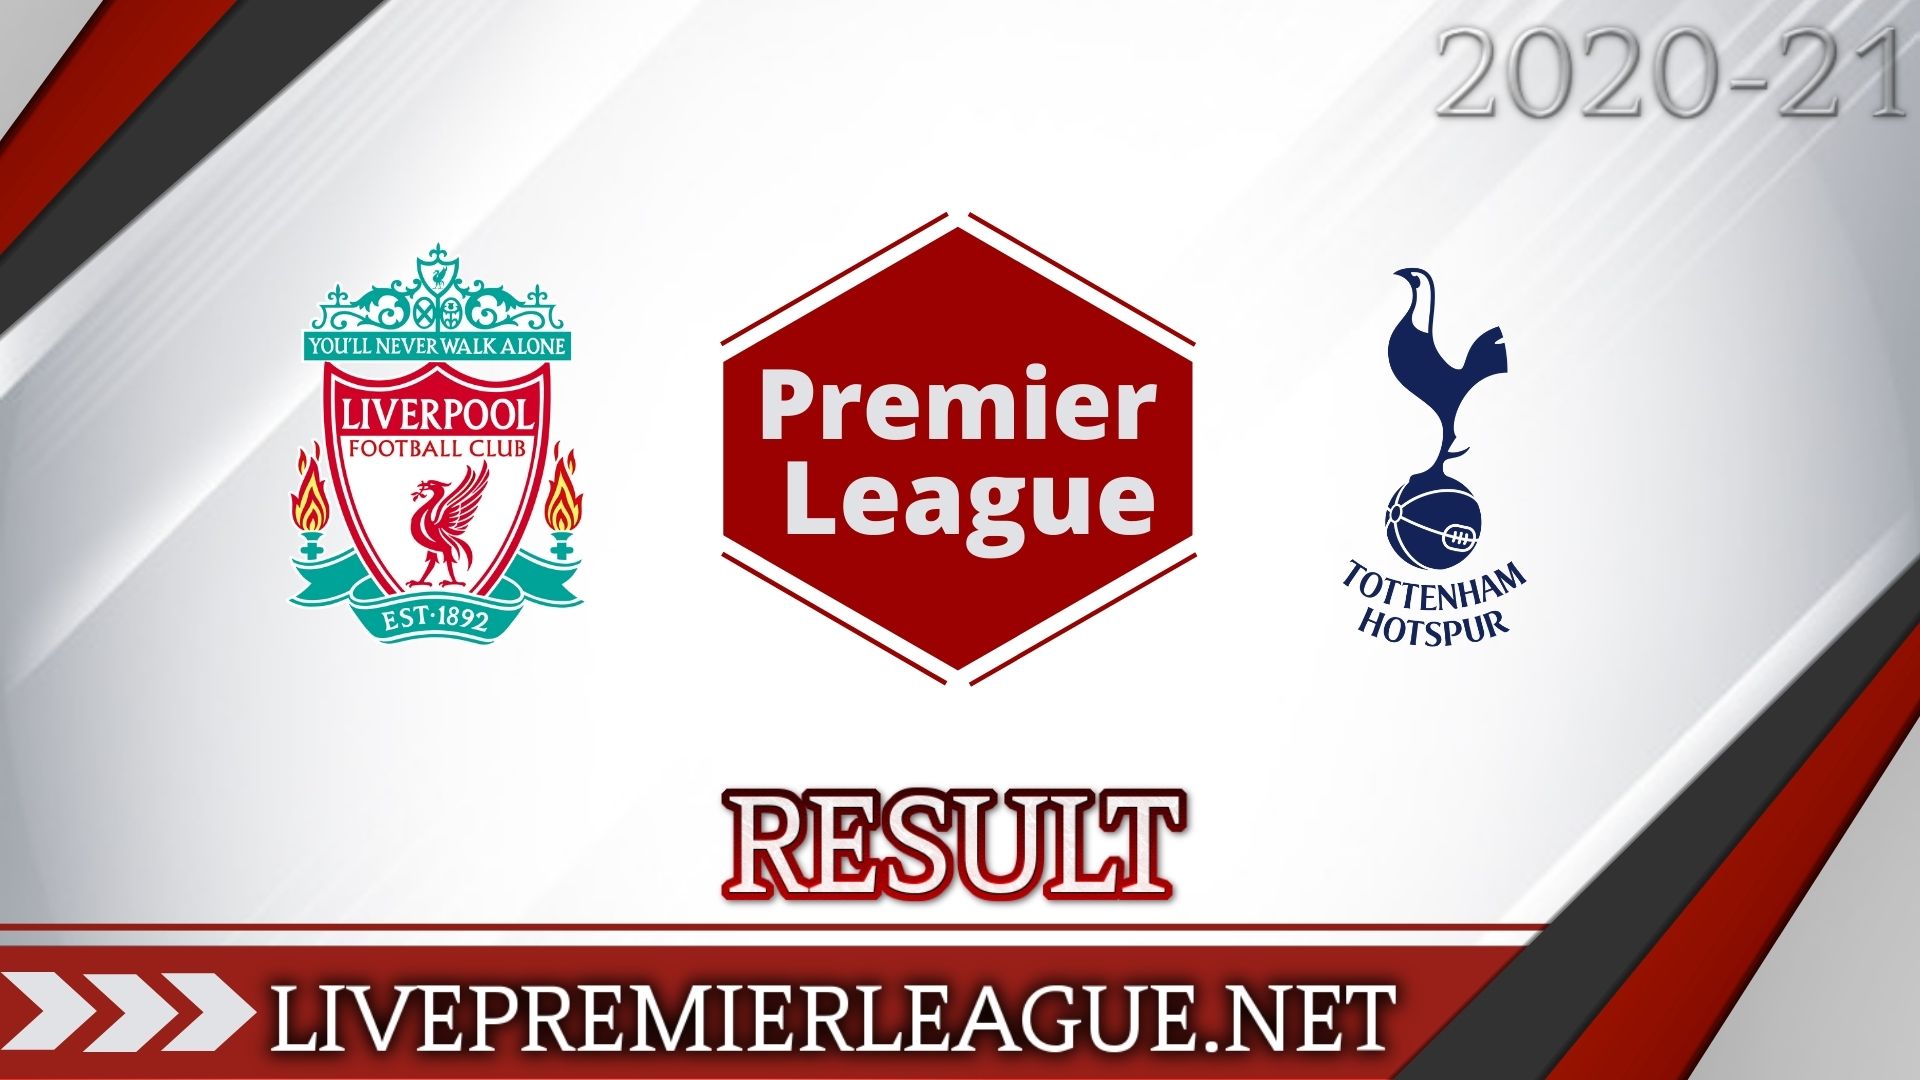 Liverpool Vs Tottenham Hotspur | Week 13 Result 2020